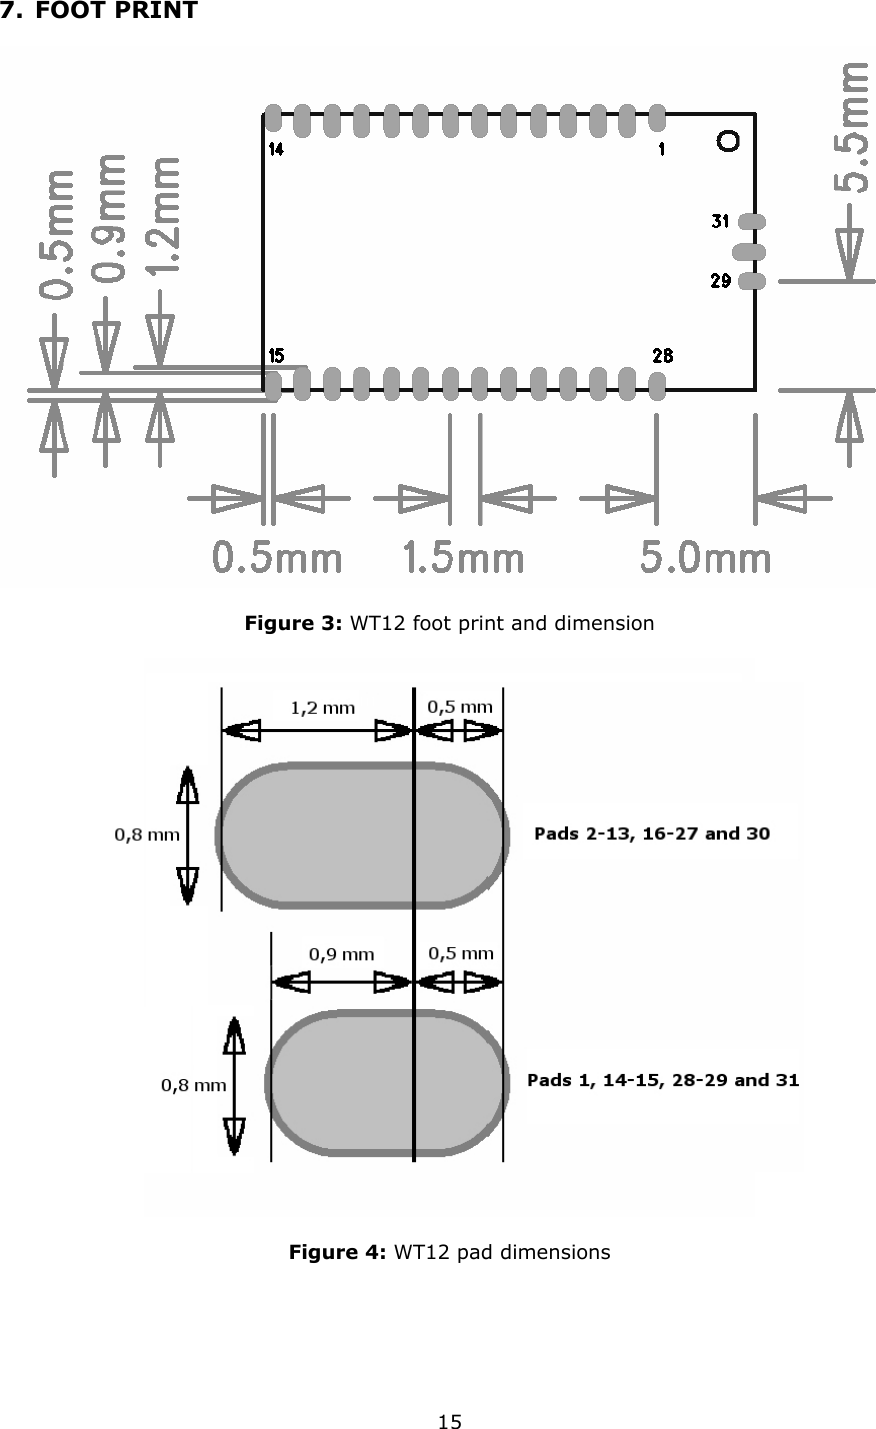   157. FOOT PRINT  Figure 3: WT12 foot print and dimension  Figure 4: WT12 pad dimensions 